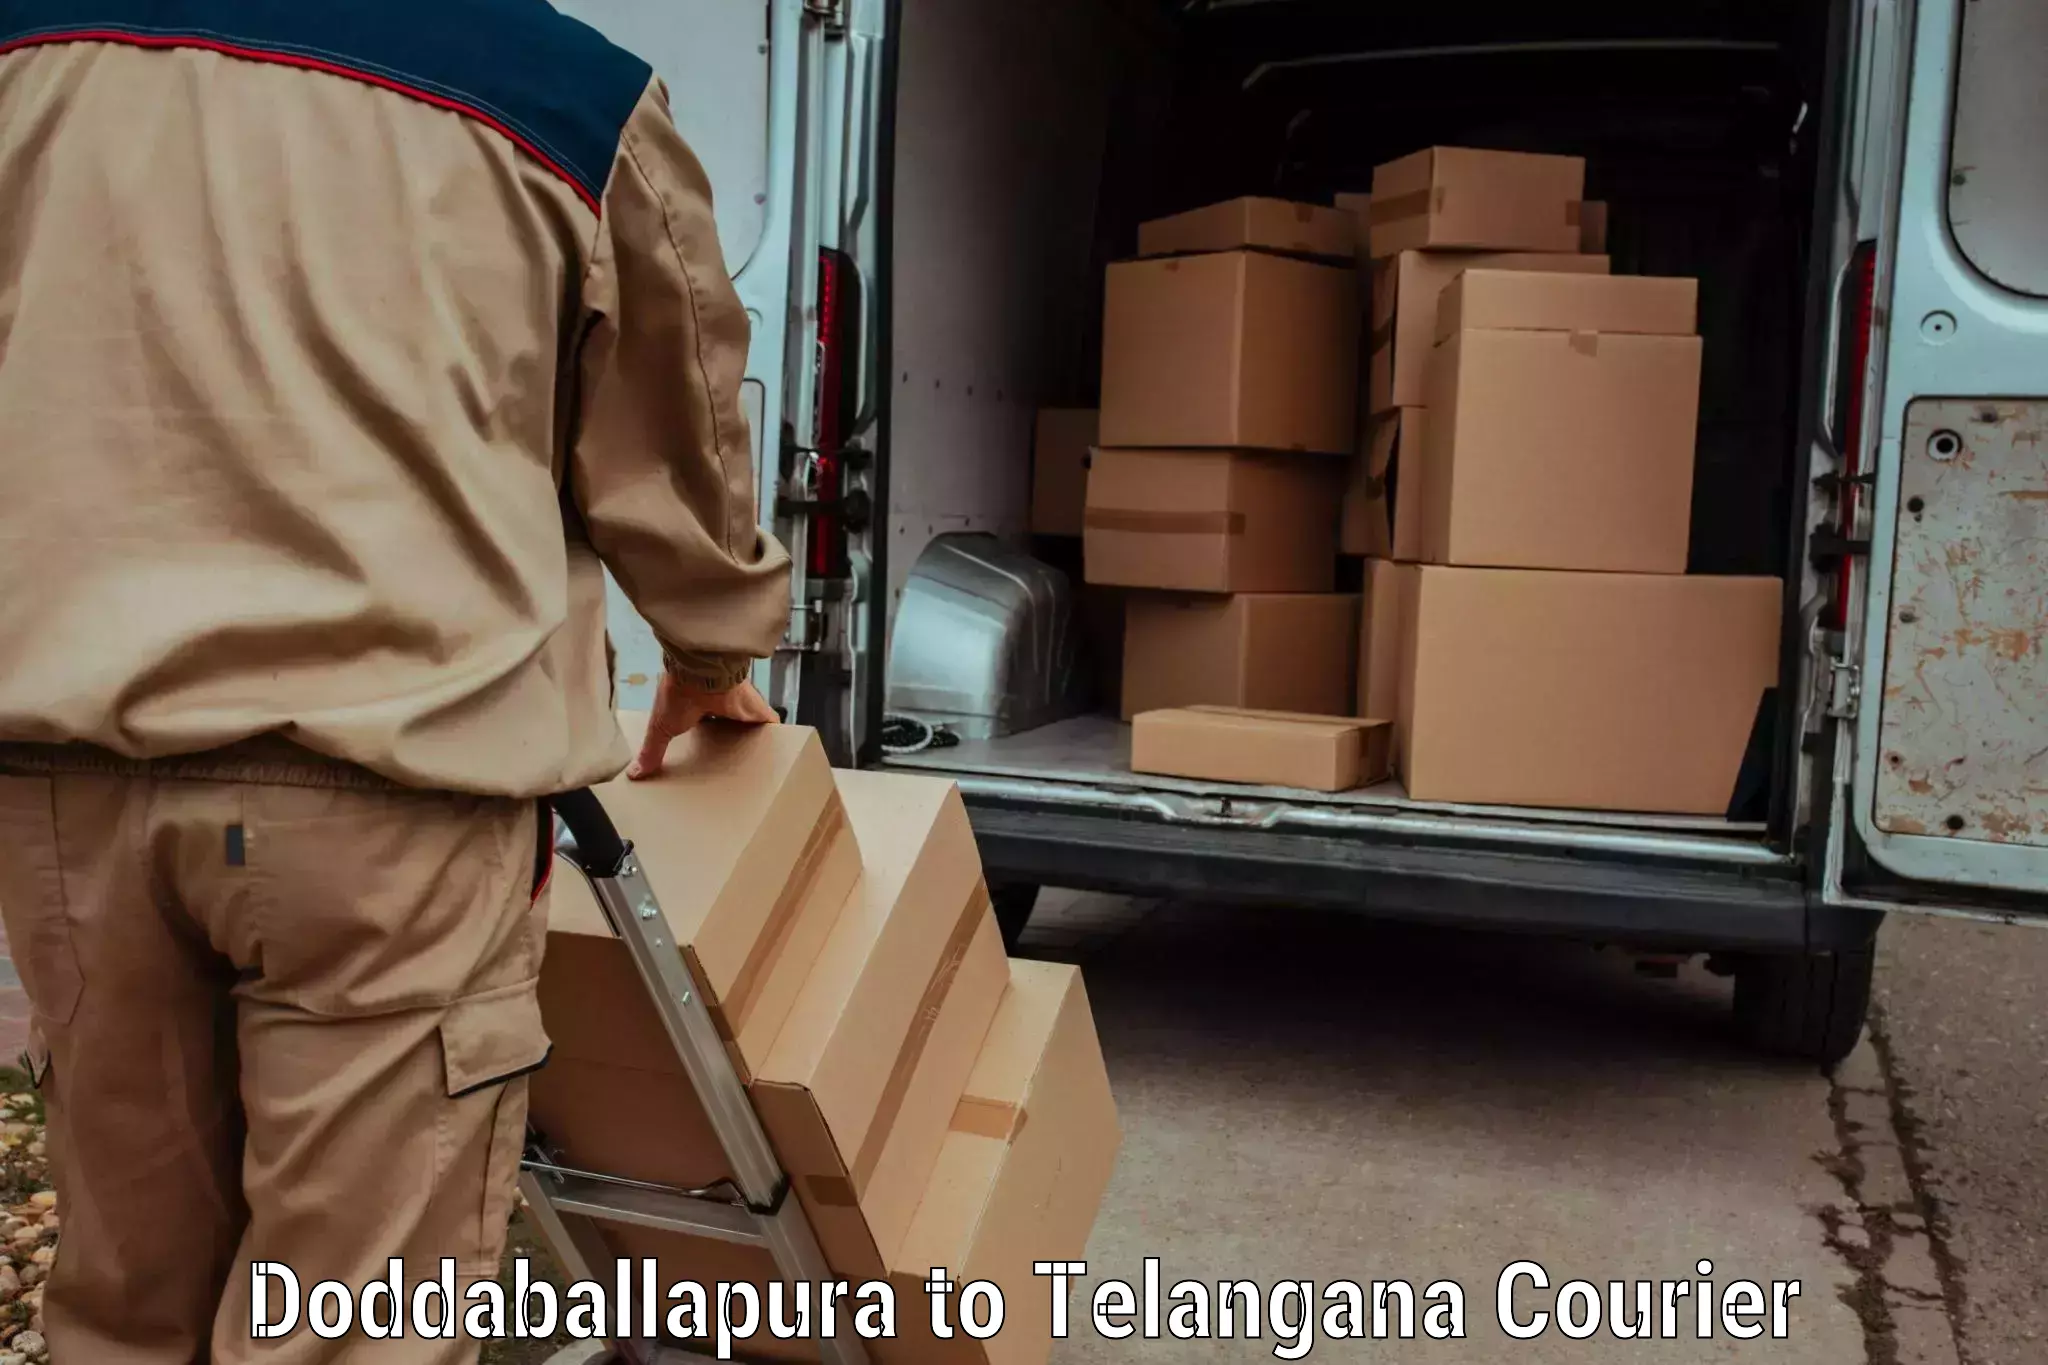 International parcel service Doddaballapura to Bhadrachalam